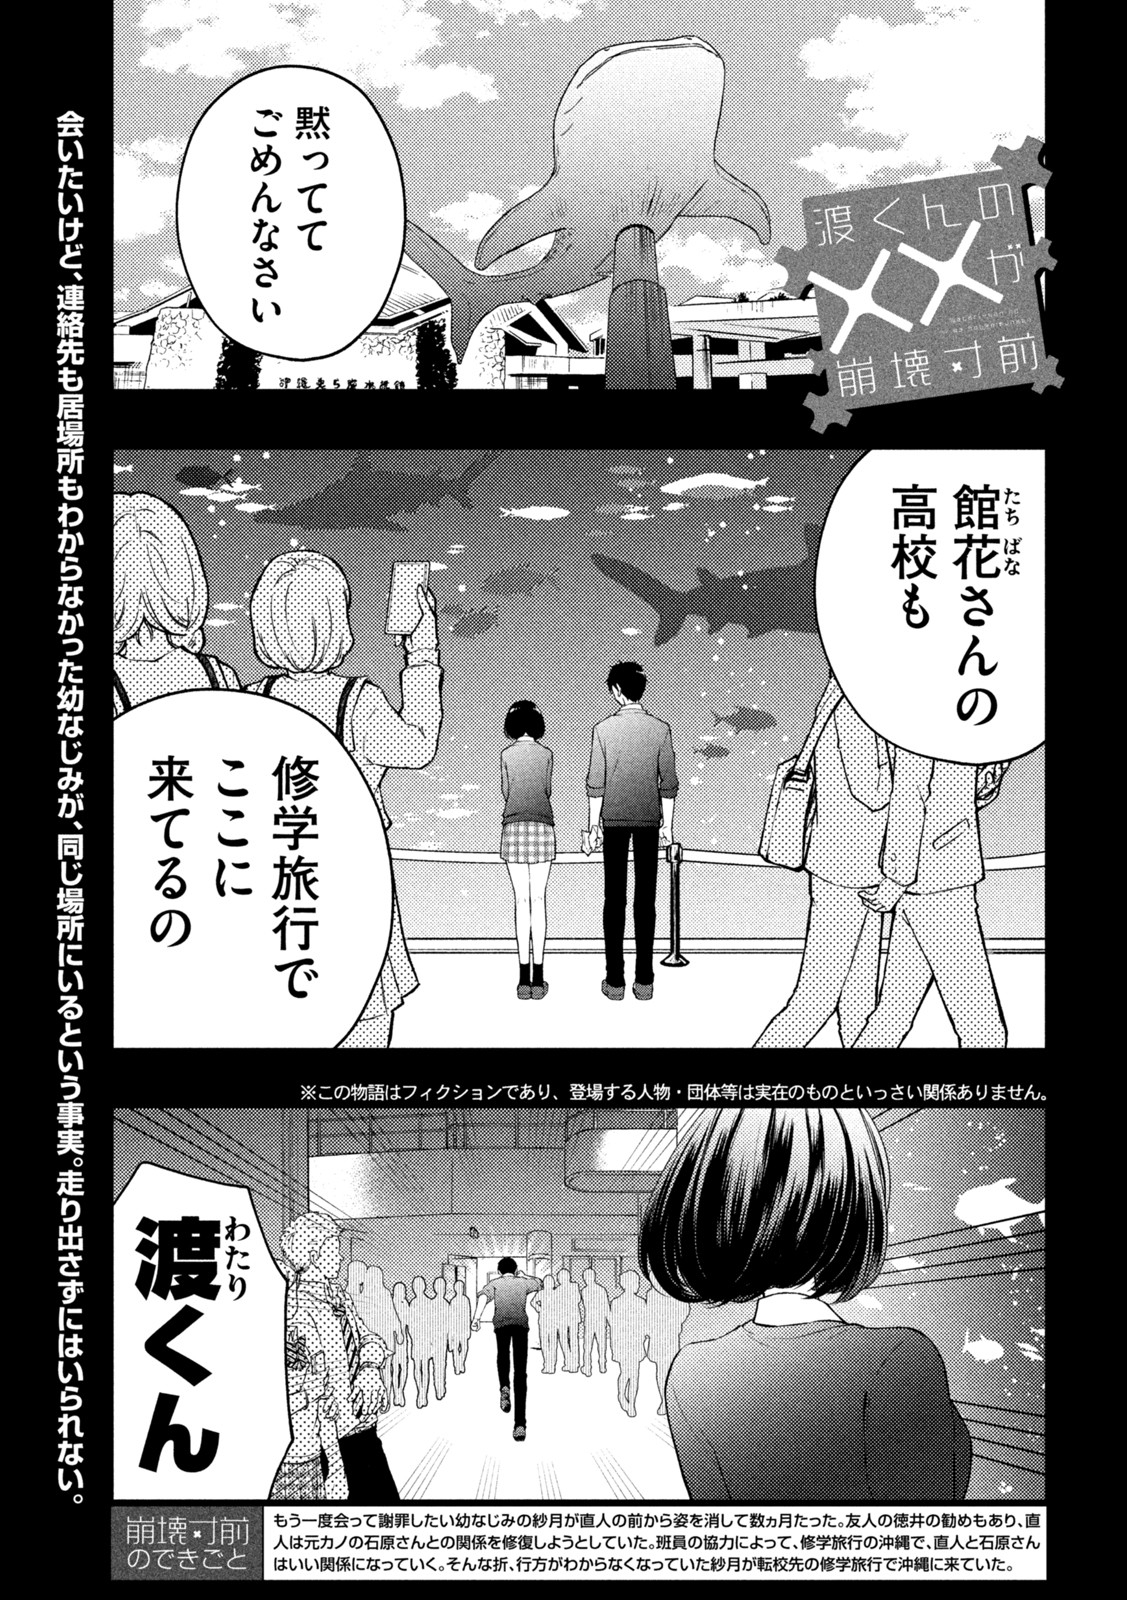 Watari-kun no xx ga Houkai Sunzen - Chapter 70 - Page 1